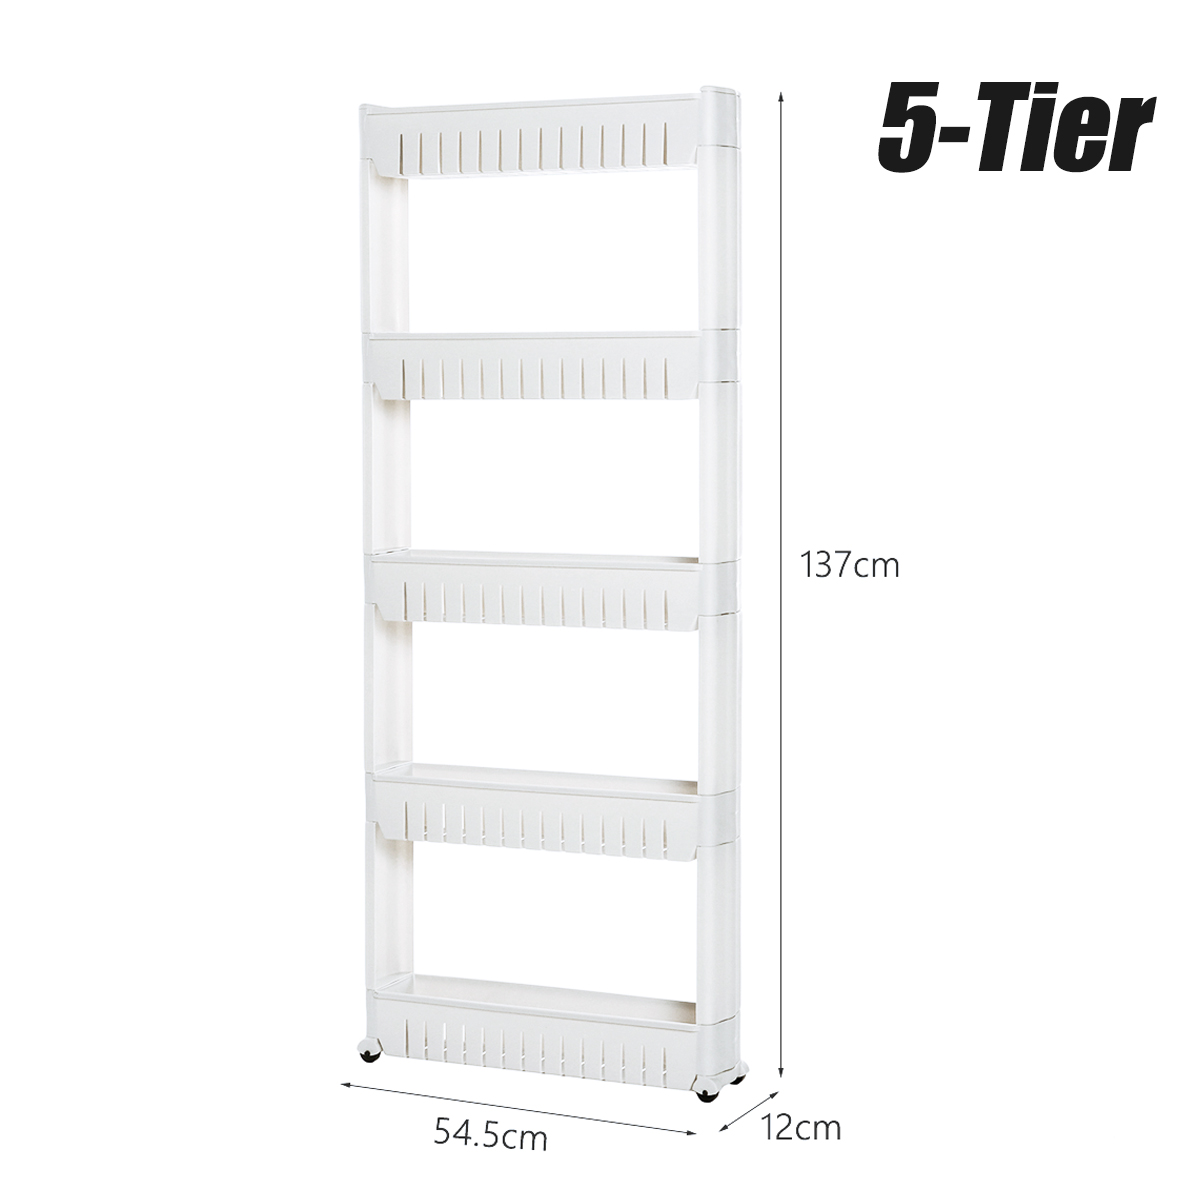 345-Tier-Slim-Slide-Out-Trolley-Storage-Holder-Rack-Organiser-Kitchen-Bathroom-1696979-15